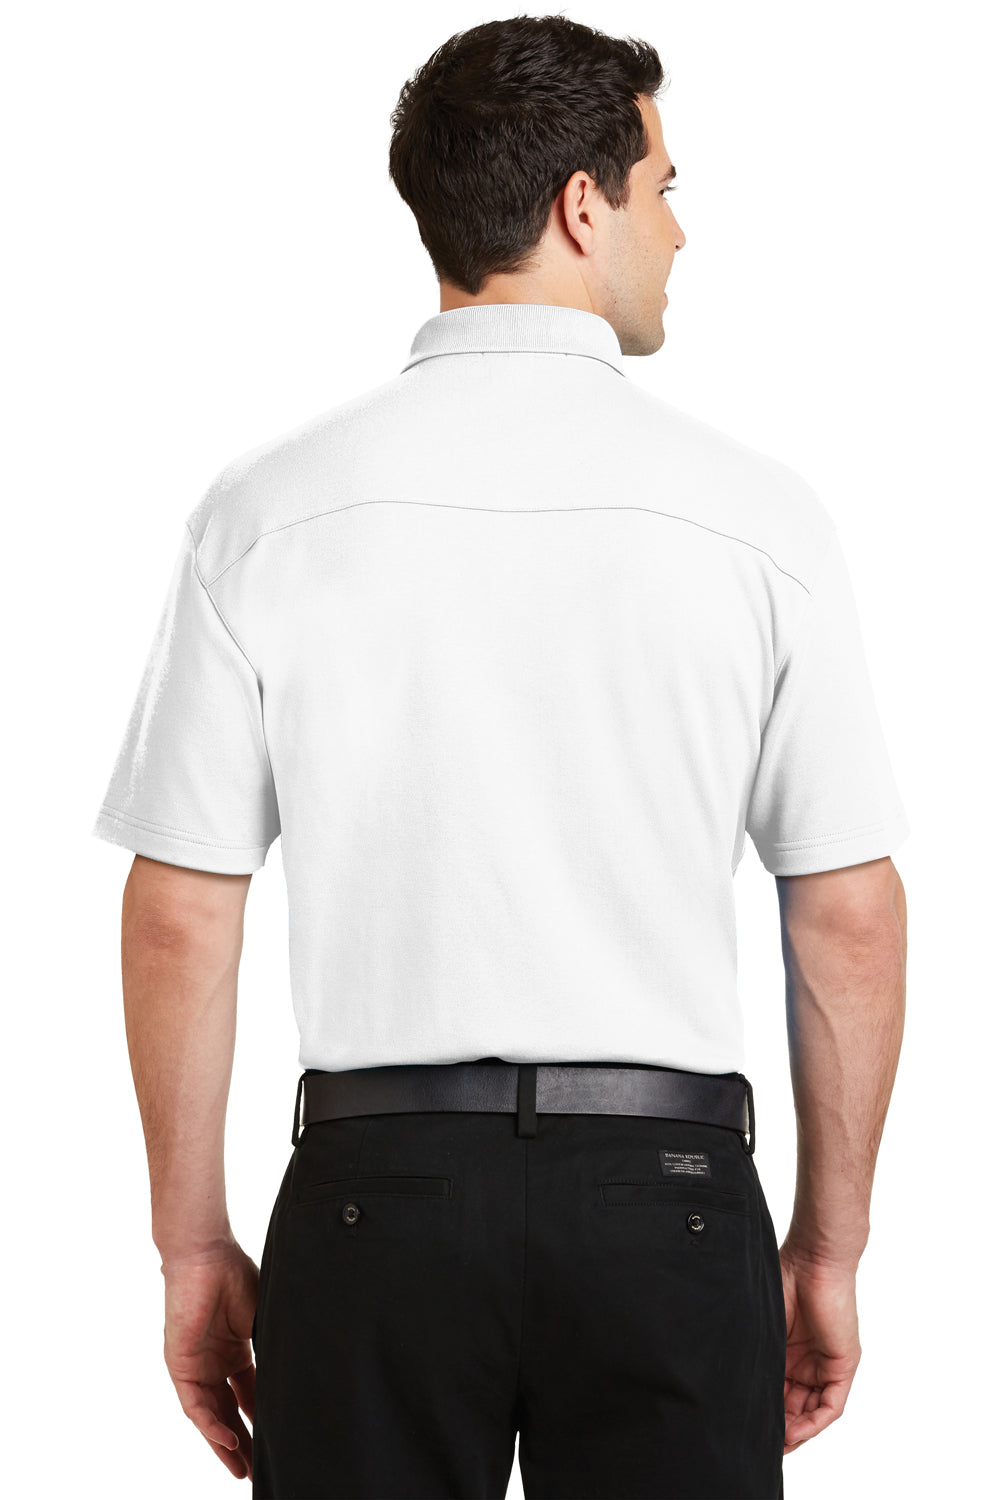 Port Authority K5200 Mens Silk Touch Performance Moisture Wicking Short Sleeve Polo Shirt White Back